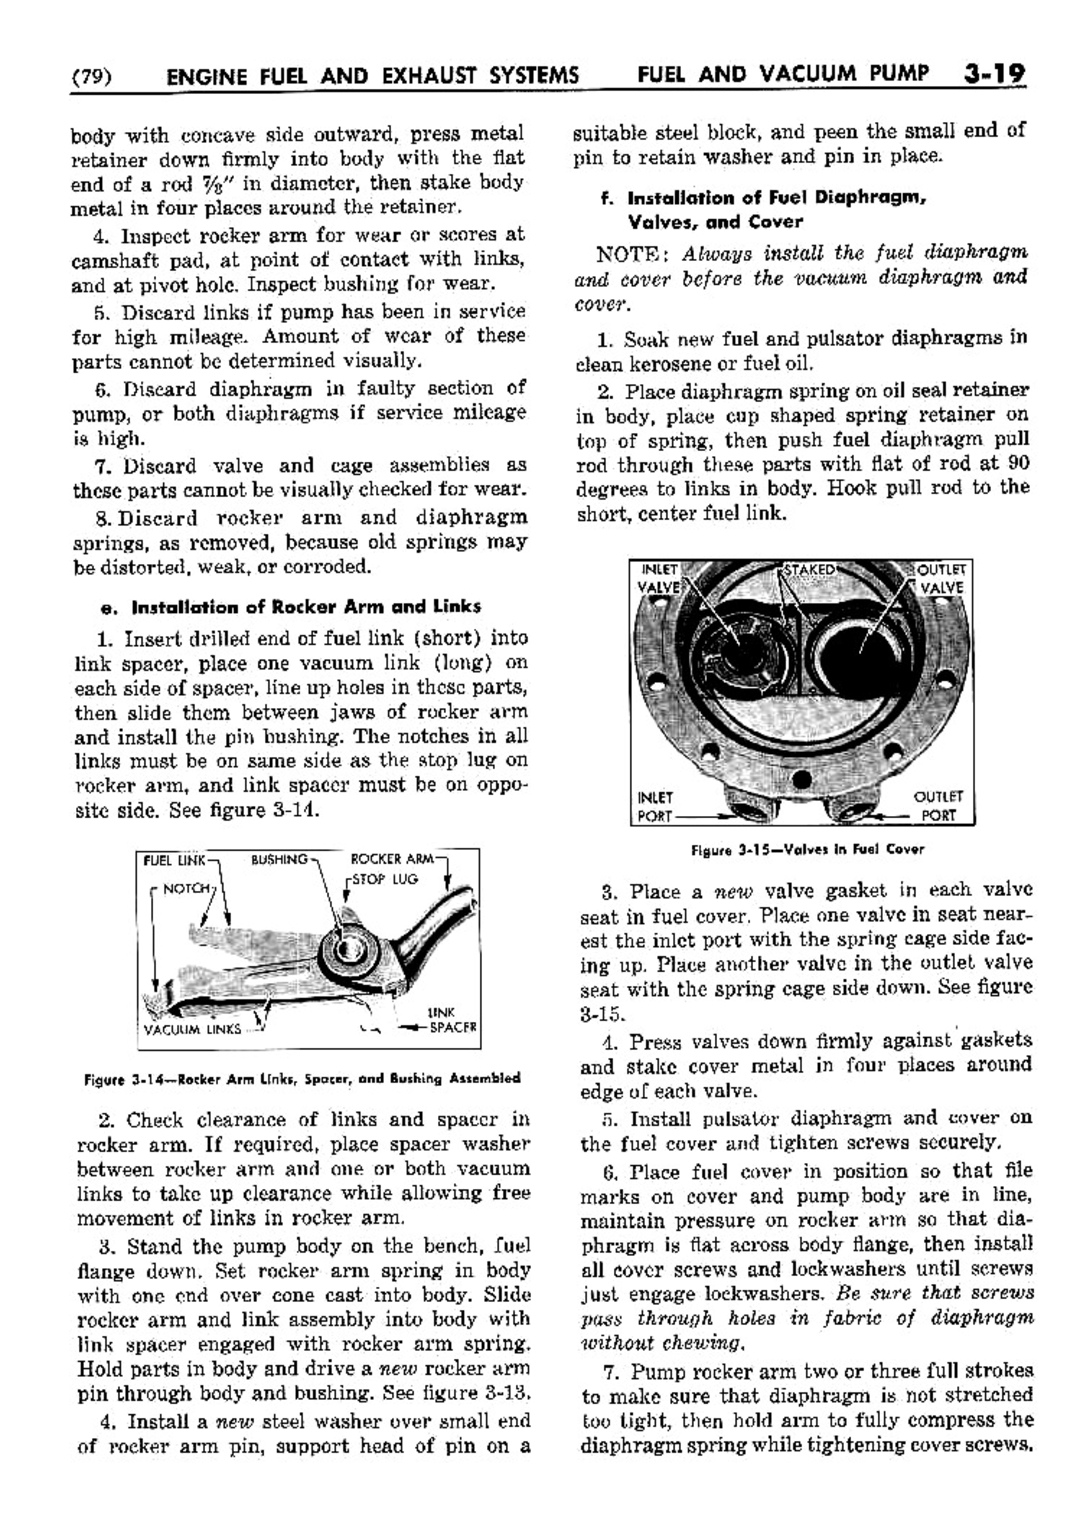 n_04 1953 Buick Shop Manual - Engine Fuel & Exhaust-019-019.jpg